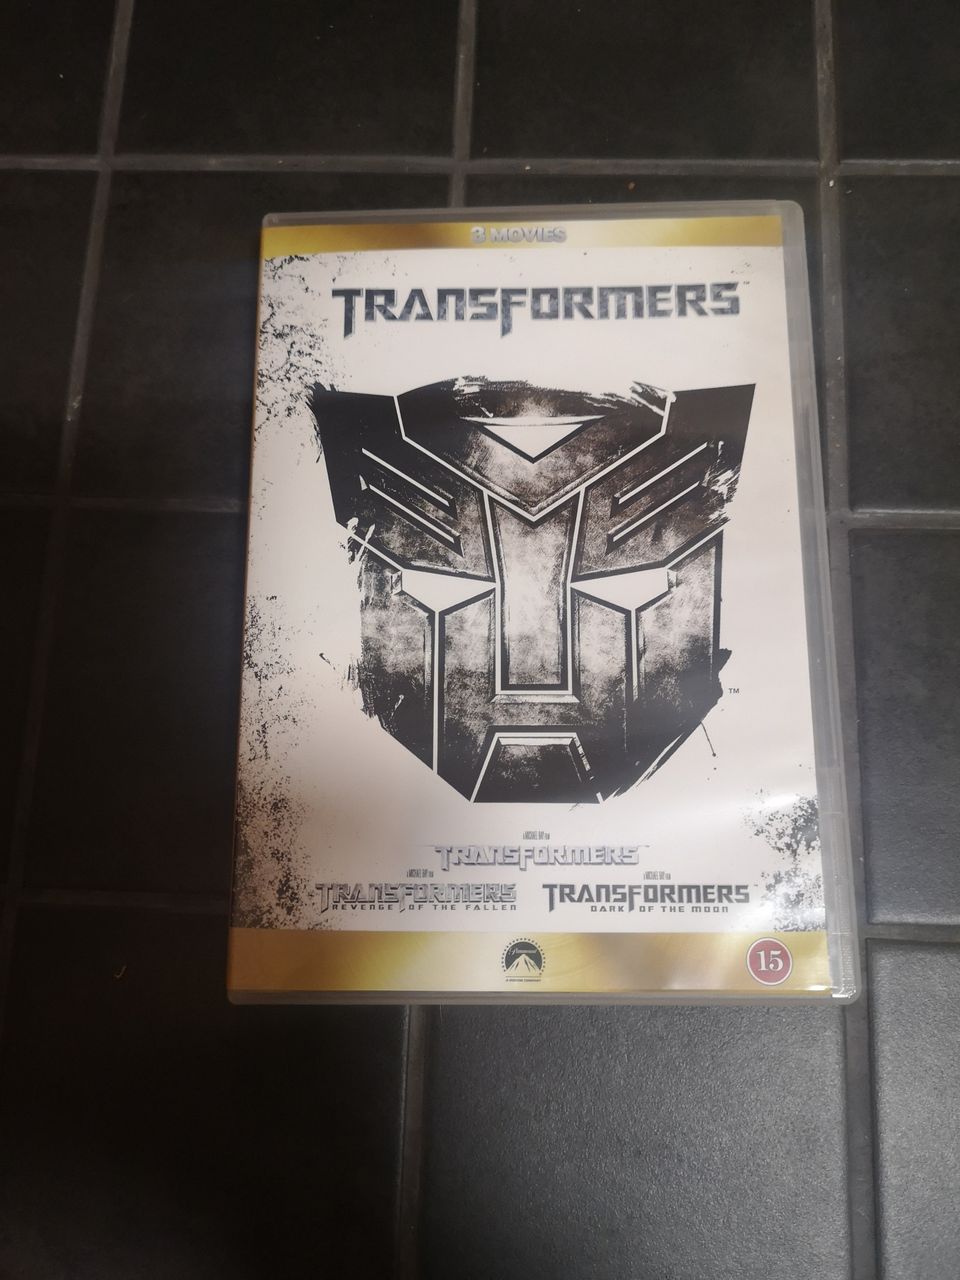 Transformers boxi